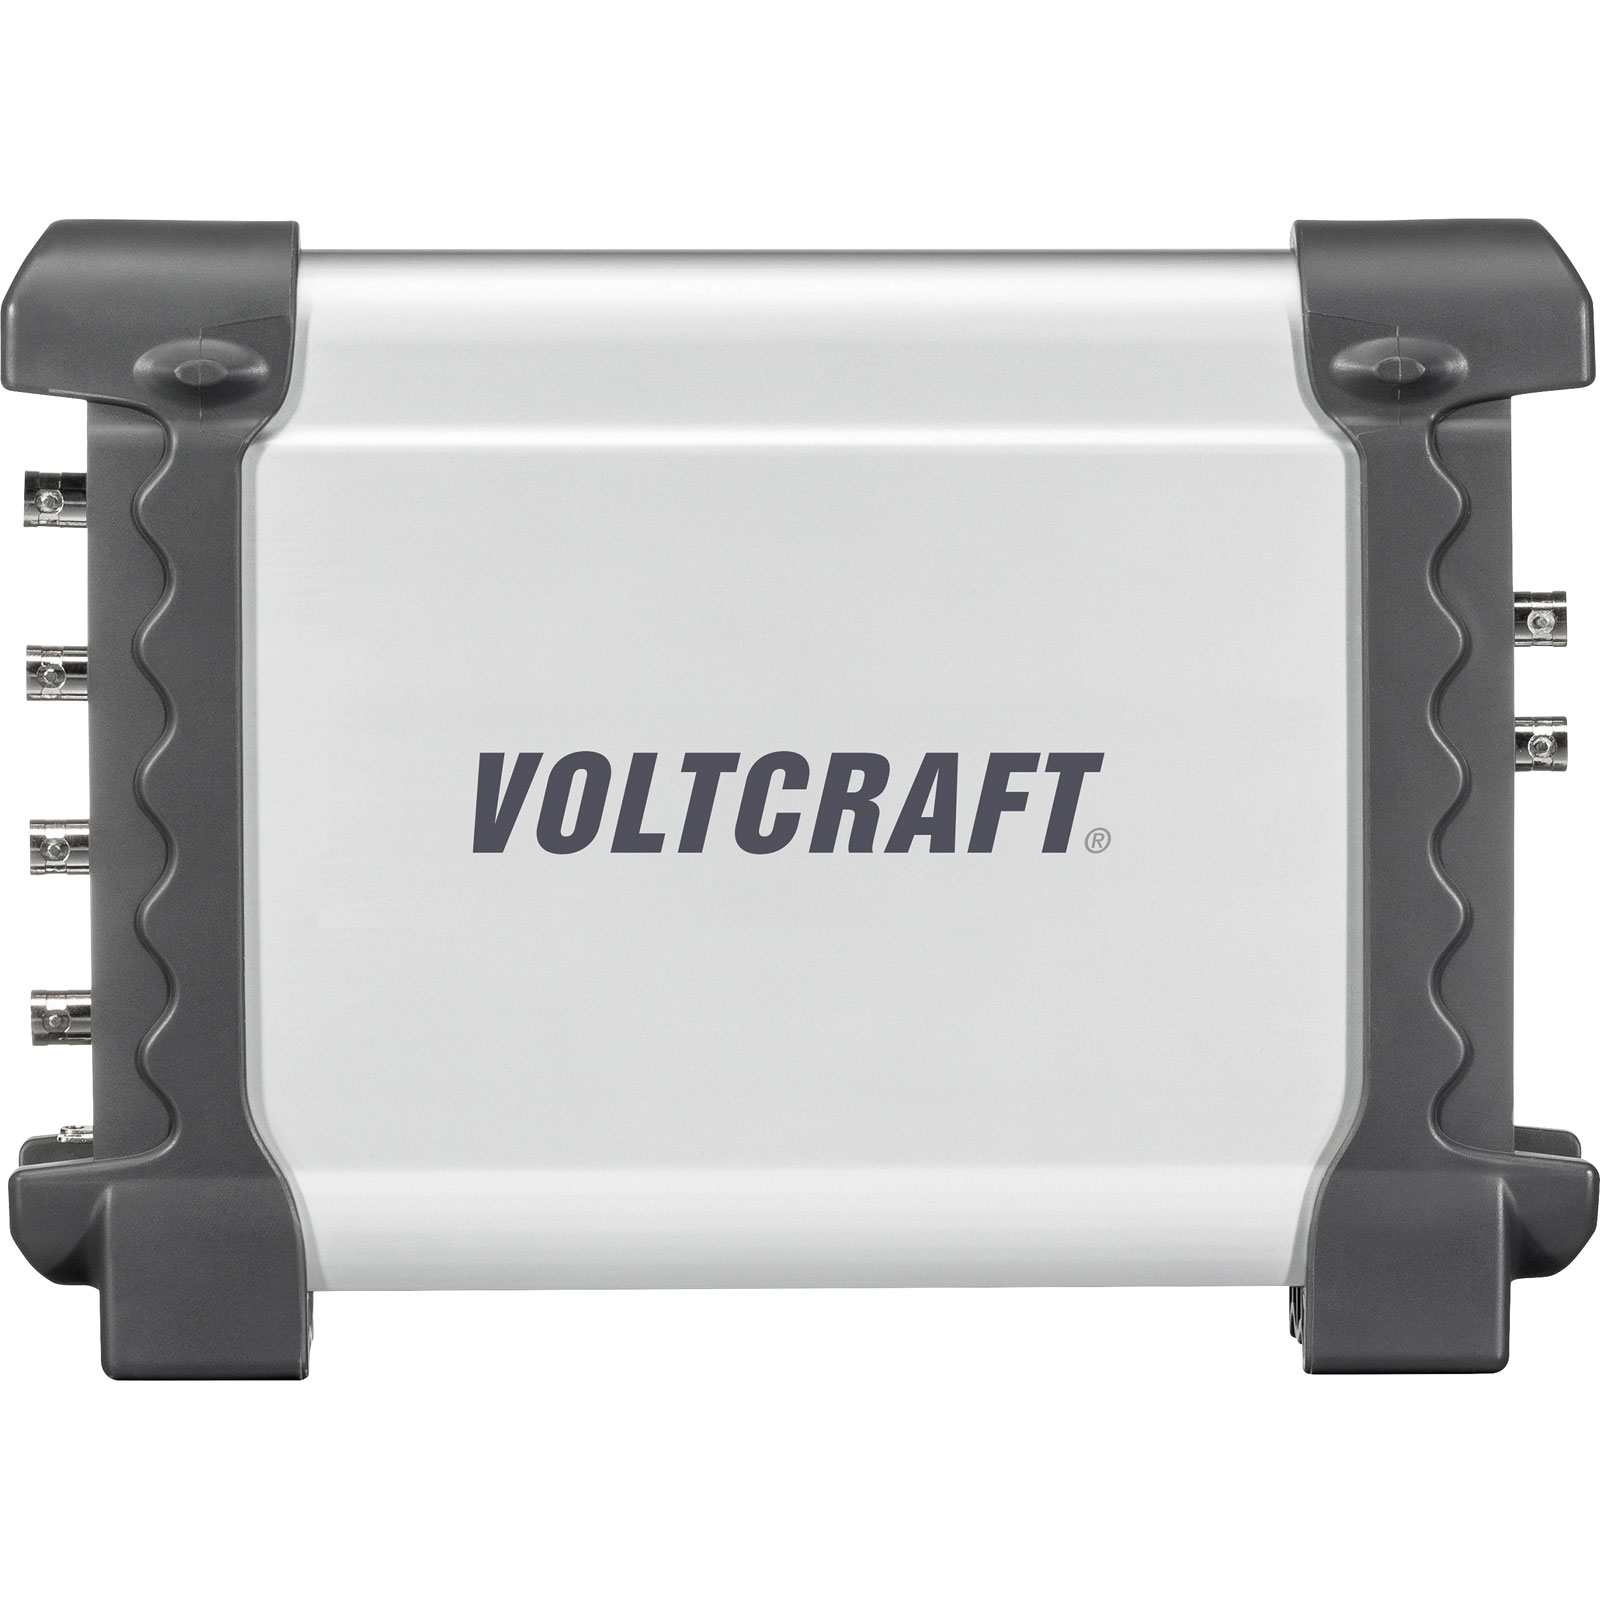 Buy VOLTCRAFT DSO-2072H Handheld oscilloscope 70 MHz 2-channel 250 MSa/s 8  KP 8 Bit Handheld 1 pc(s)